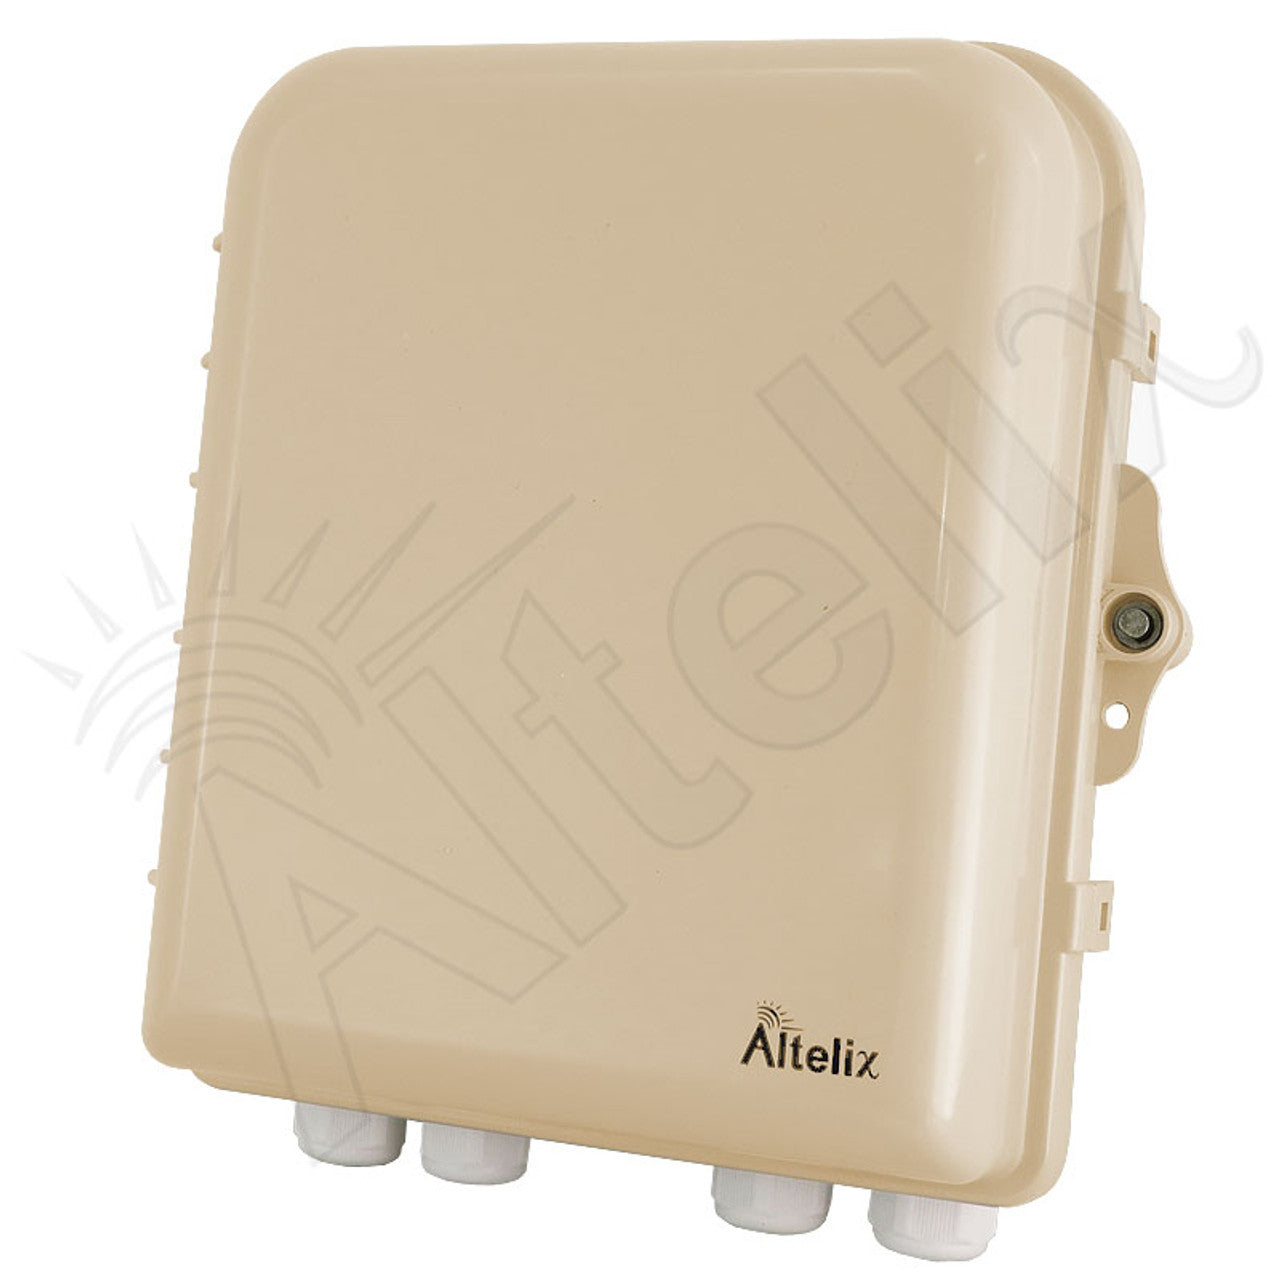 Altelix 10x9x4 IP66 NEMA 4X PC+ABS Weatherproof Utility Box with Hinged Door and Aluminum Mounting Plate